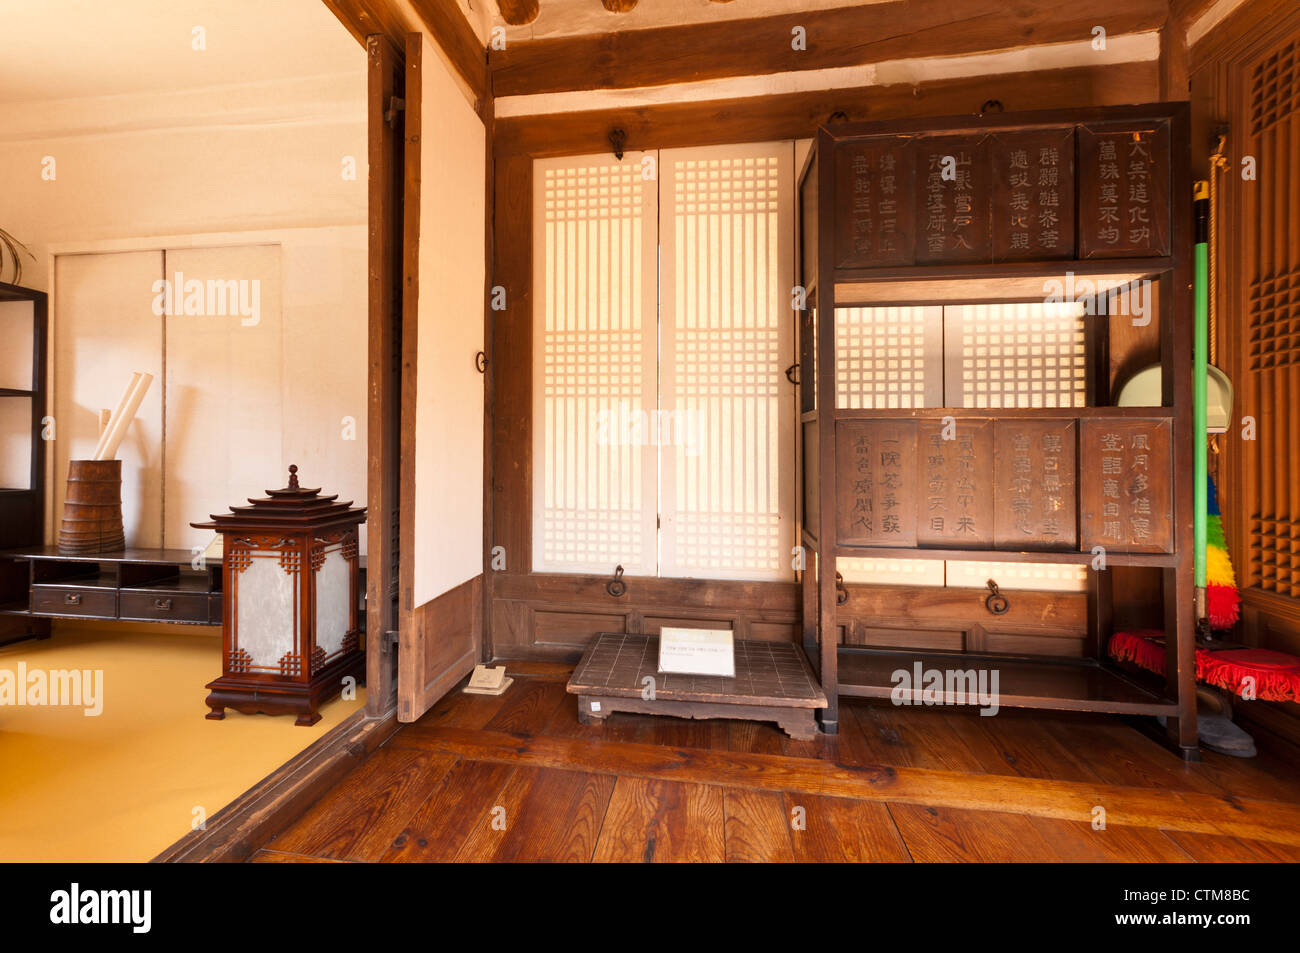 Typical interior of traditional Korean noble man's house, Namsangol Hanok Village, Seoul, Korea Stock Photo